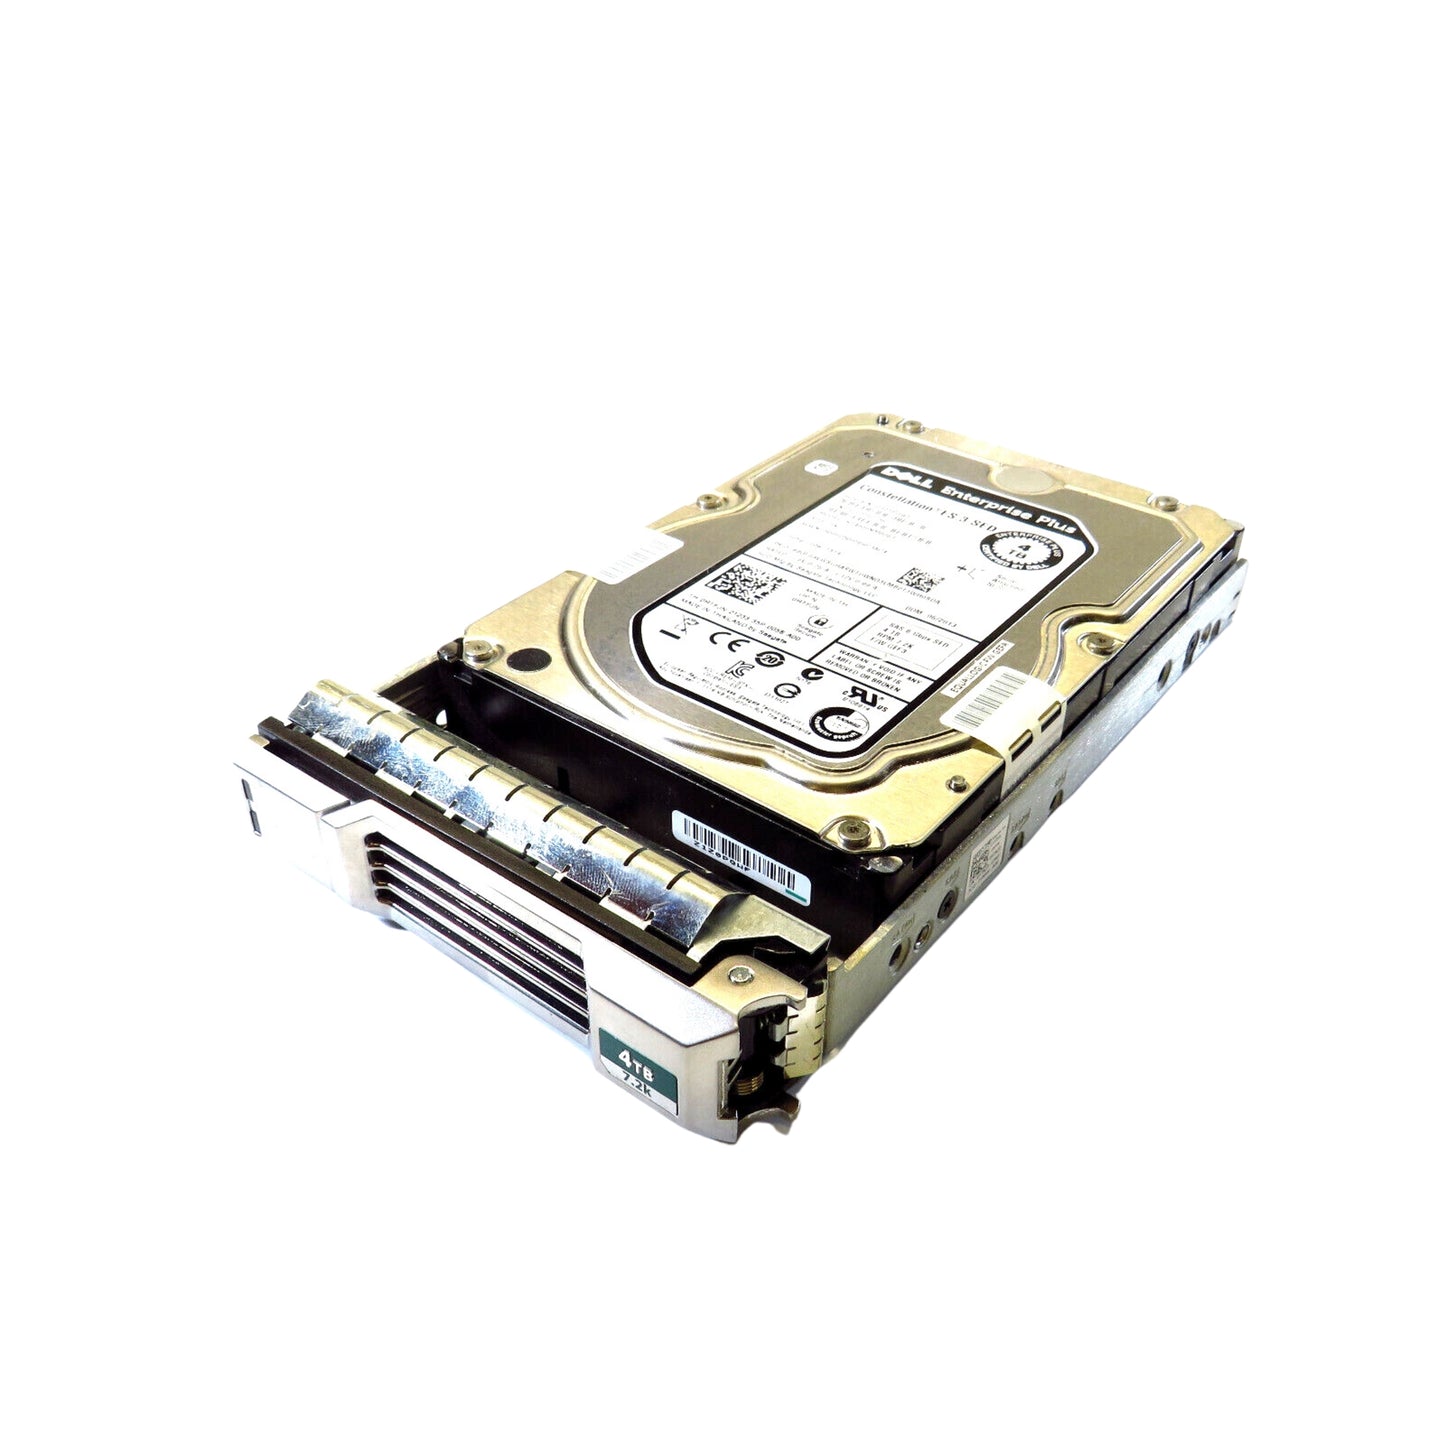 Dell RTFJN 3.5" 4TB 7200RPM SAS 6Gb/s Hard Disk Drive (HDD), Silver (Refurbished)